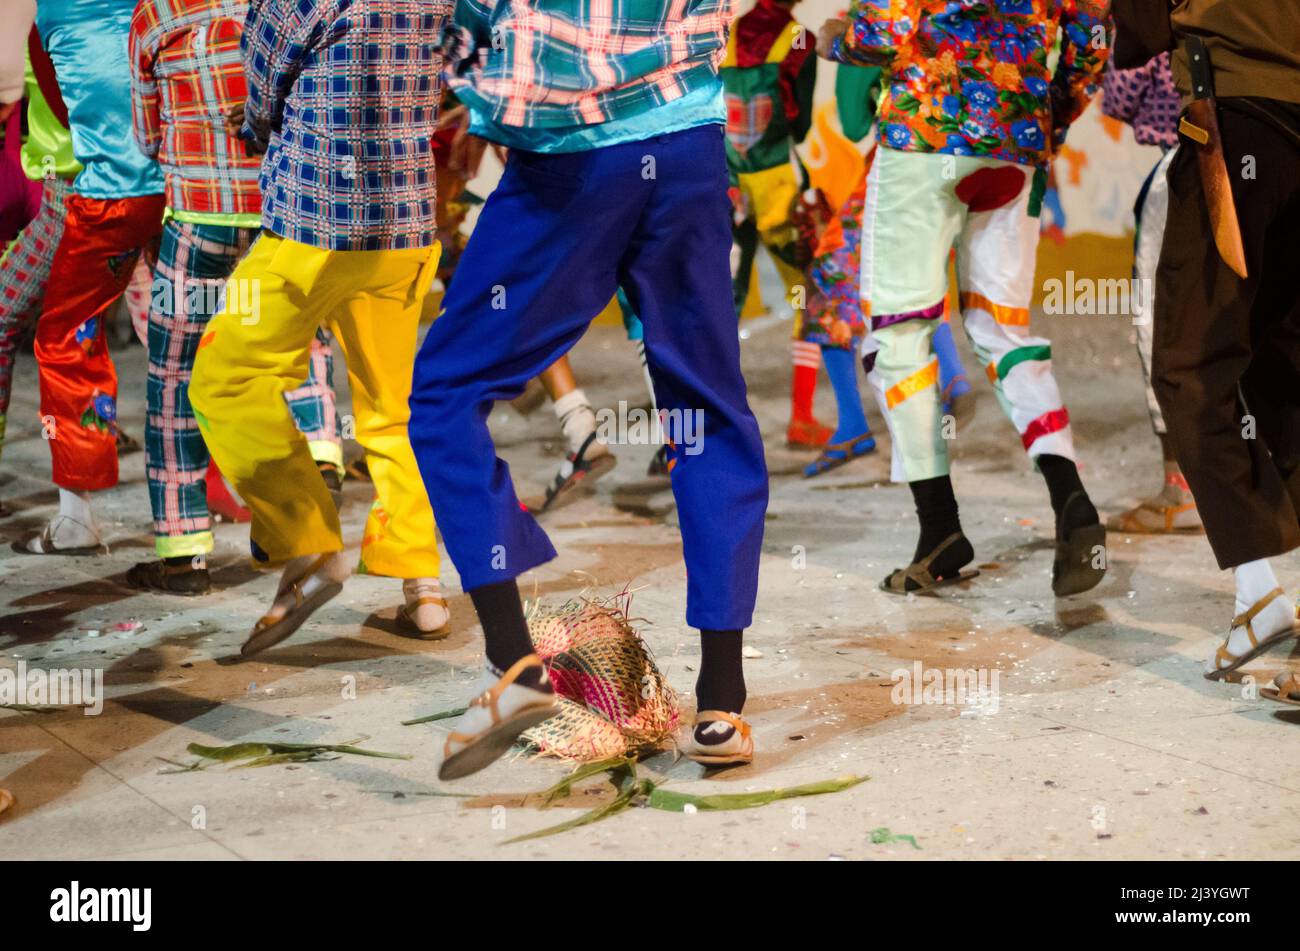 quadrilha matuta (quadrilha junina) performs at the june festivals in rio grande do norte, brazil Stock Photo